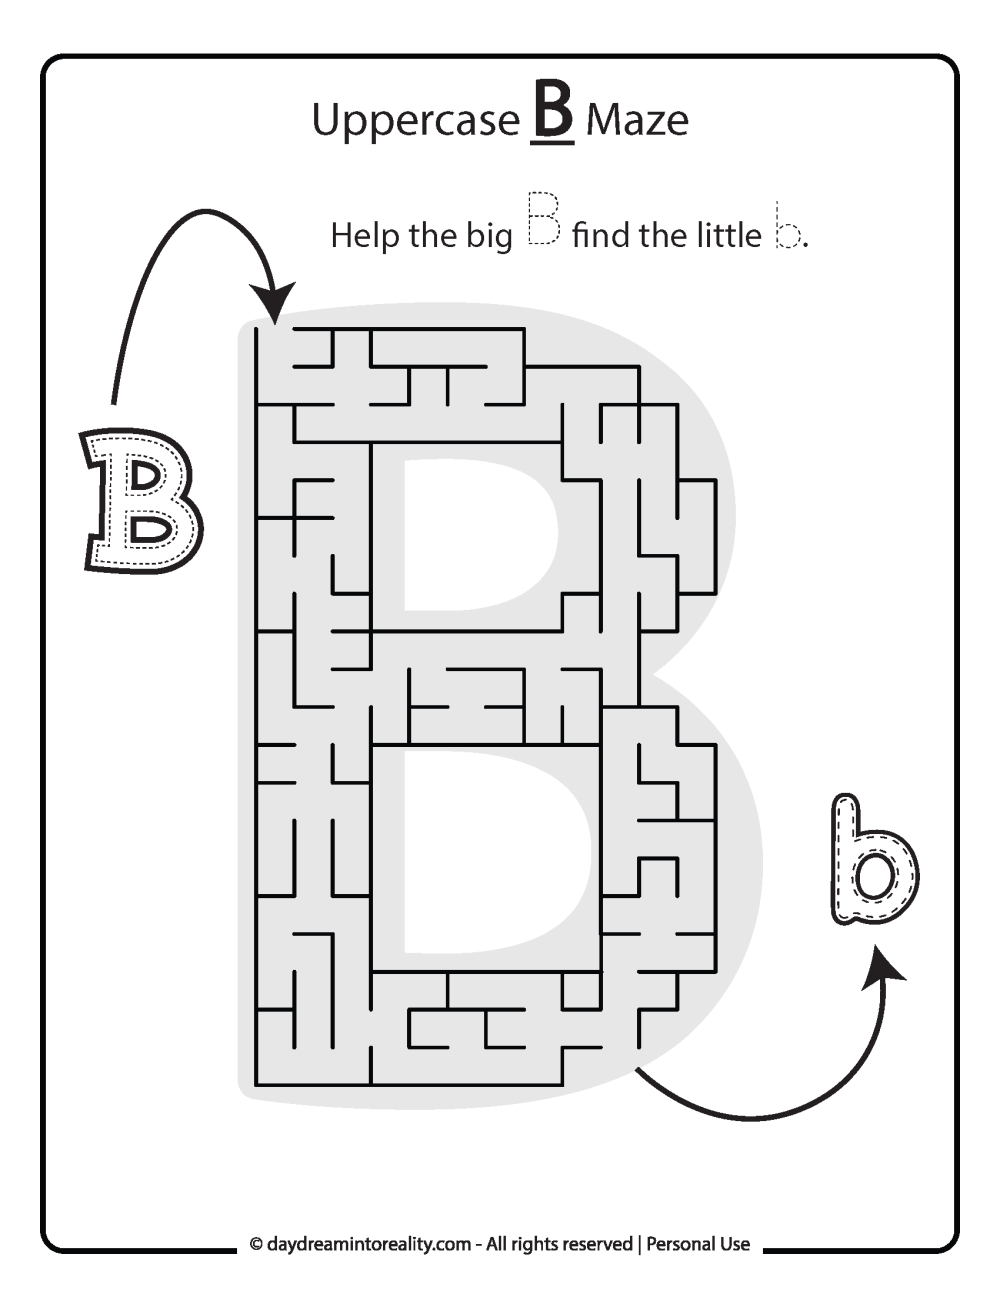 Uppercase "B" Maze Free Printable